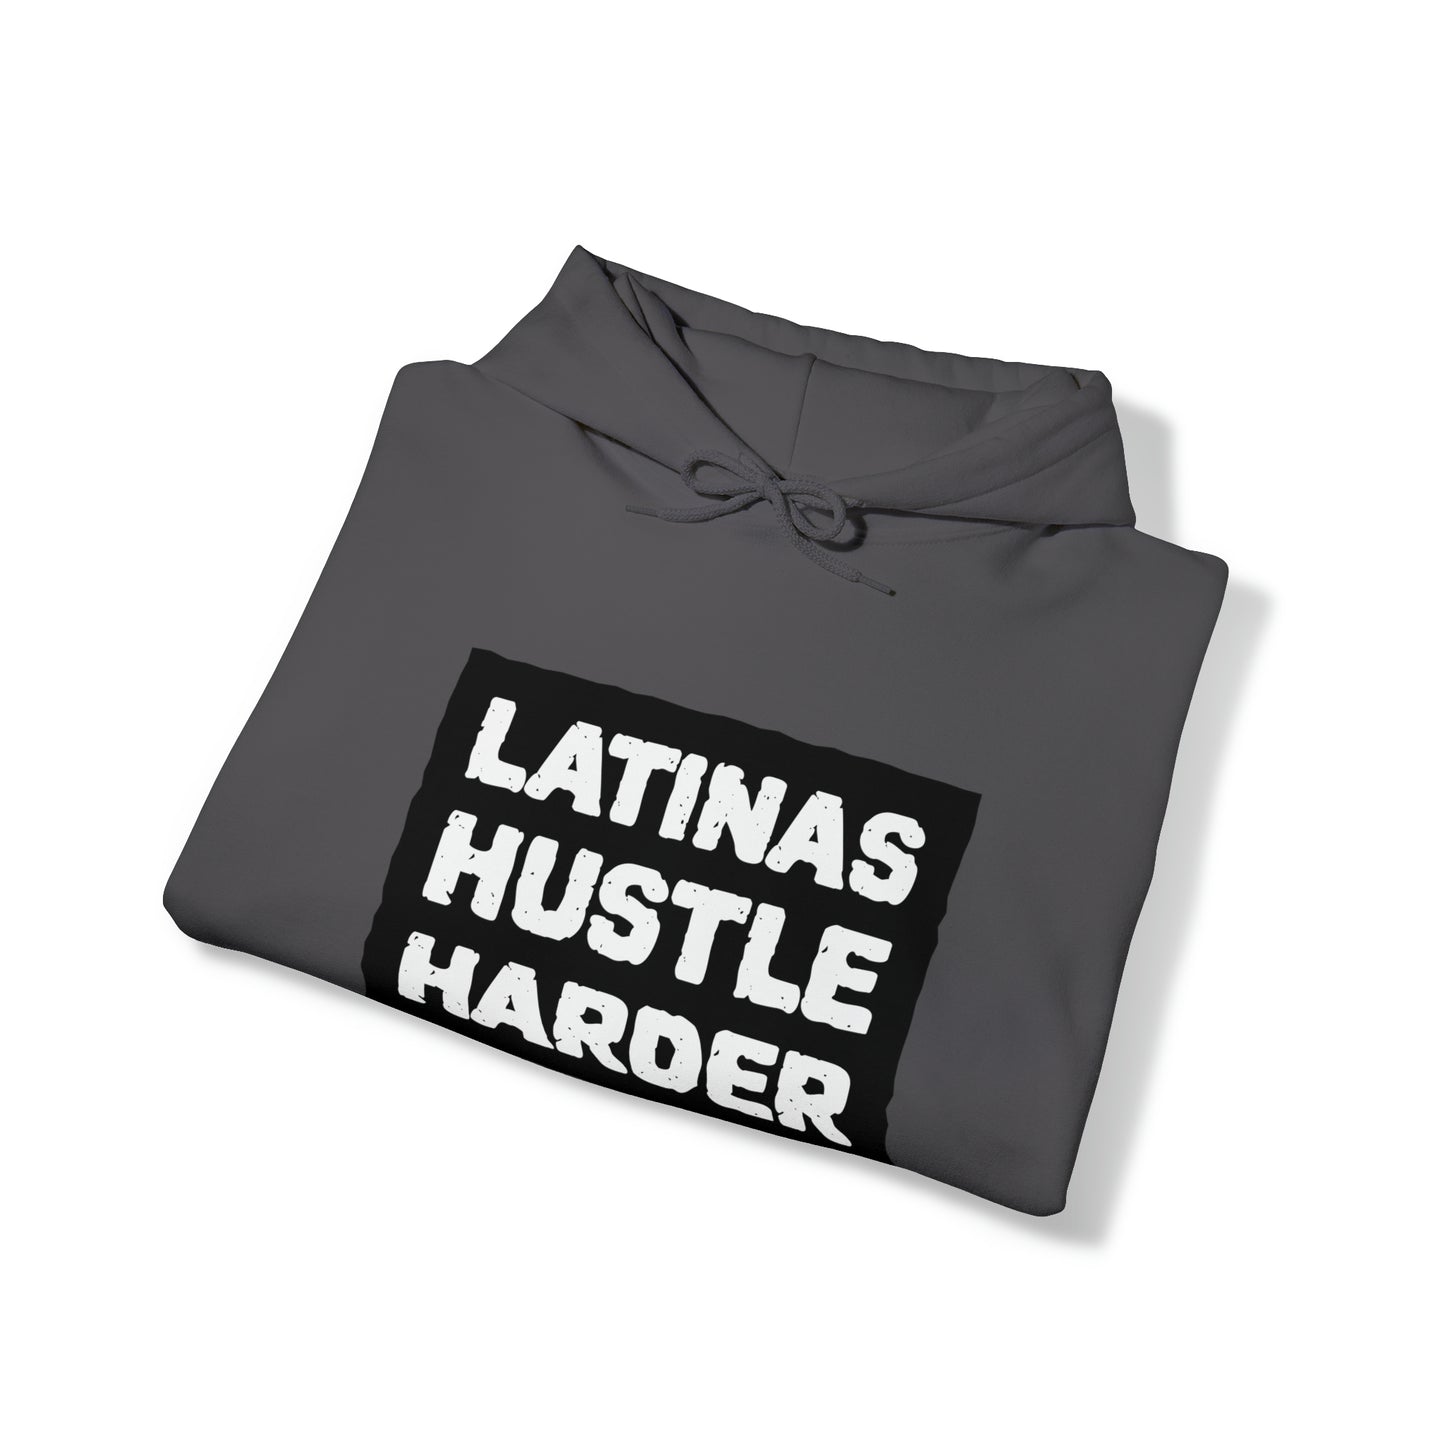 Latinathlete Hustle Harder Heavy Blend™ Hooded Sweatshirt